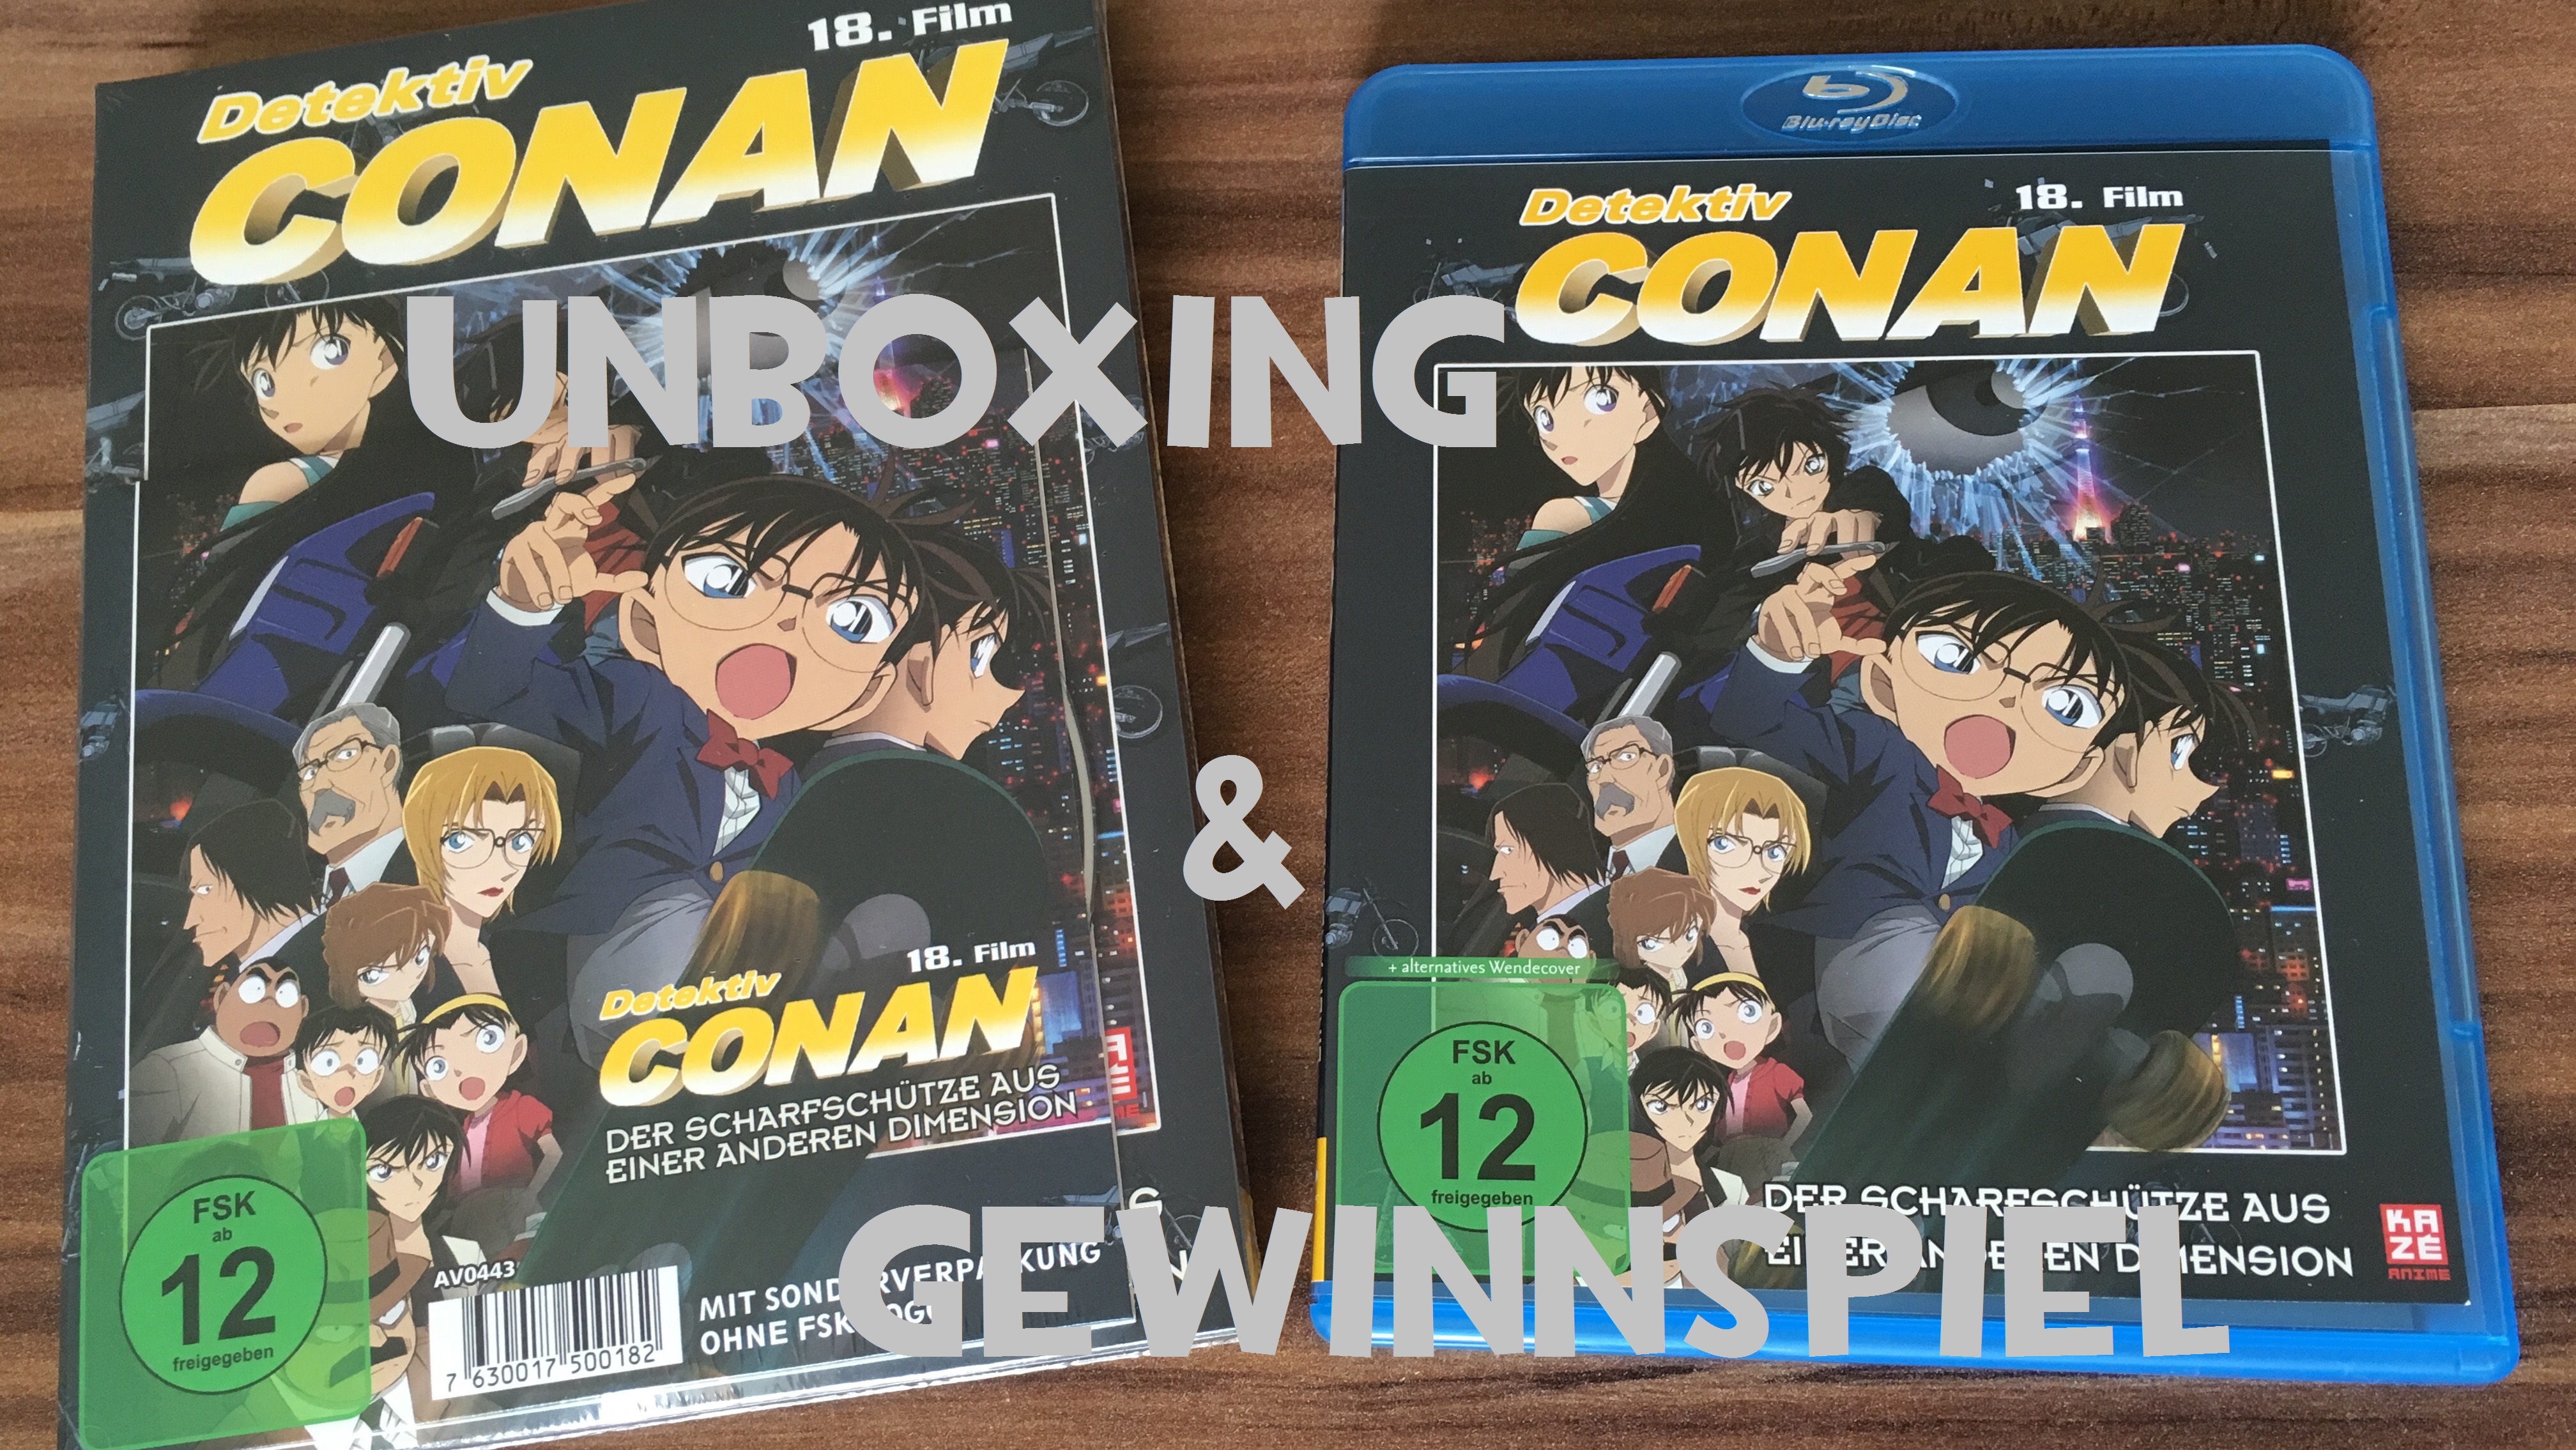 Detektiv Conan 18 Film Unboxing Gewinnspiel